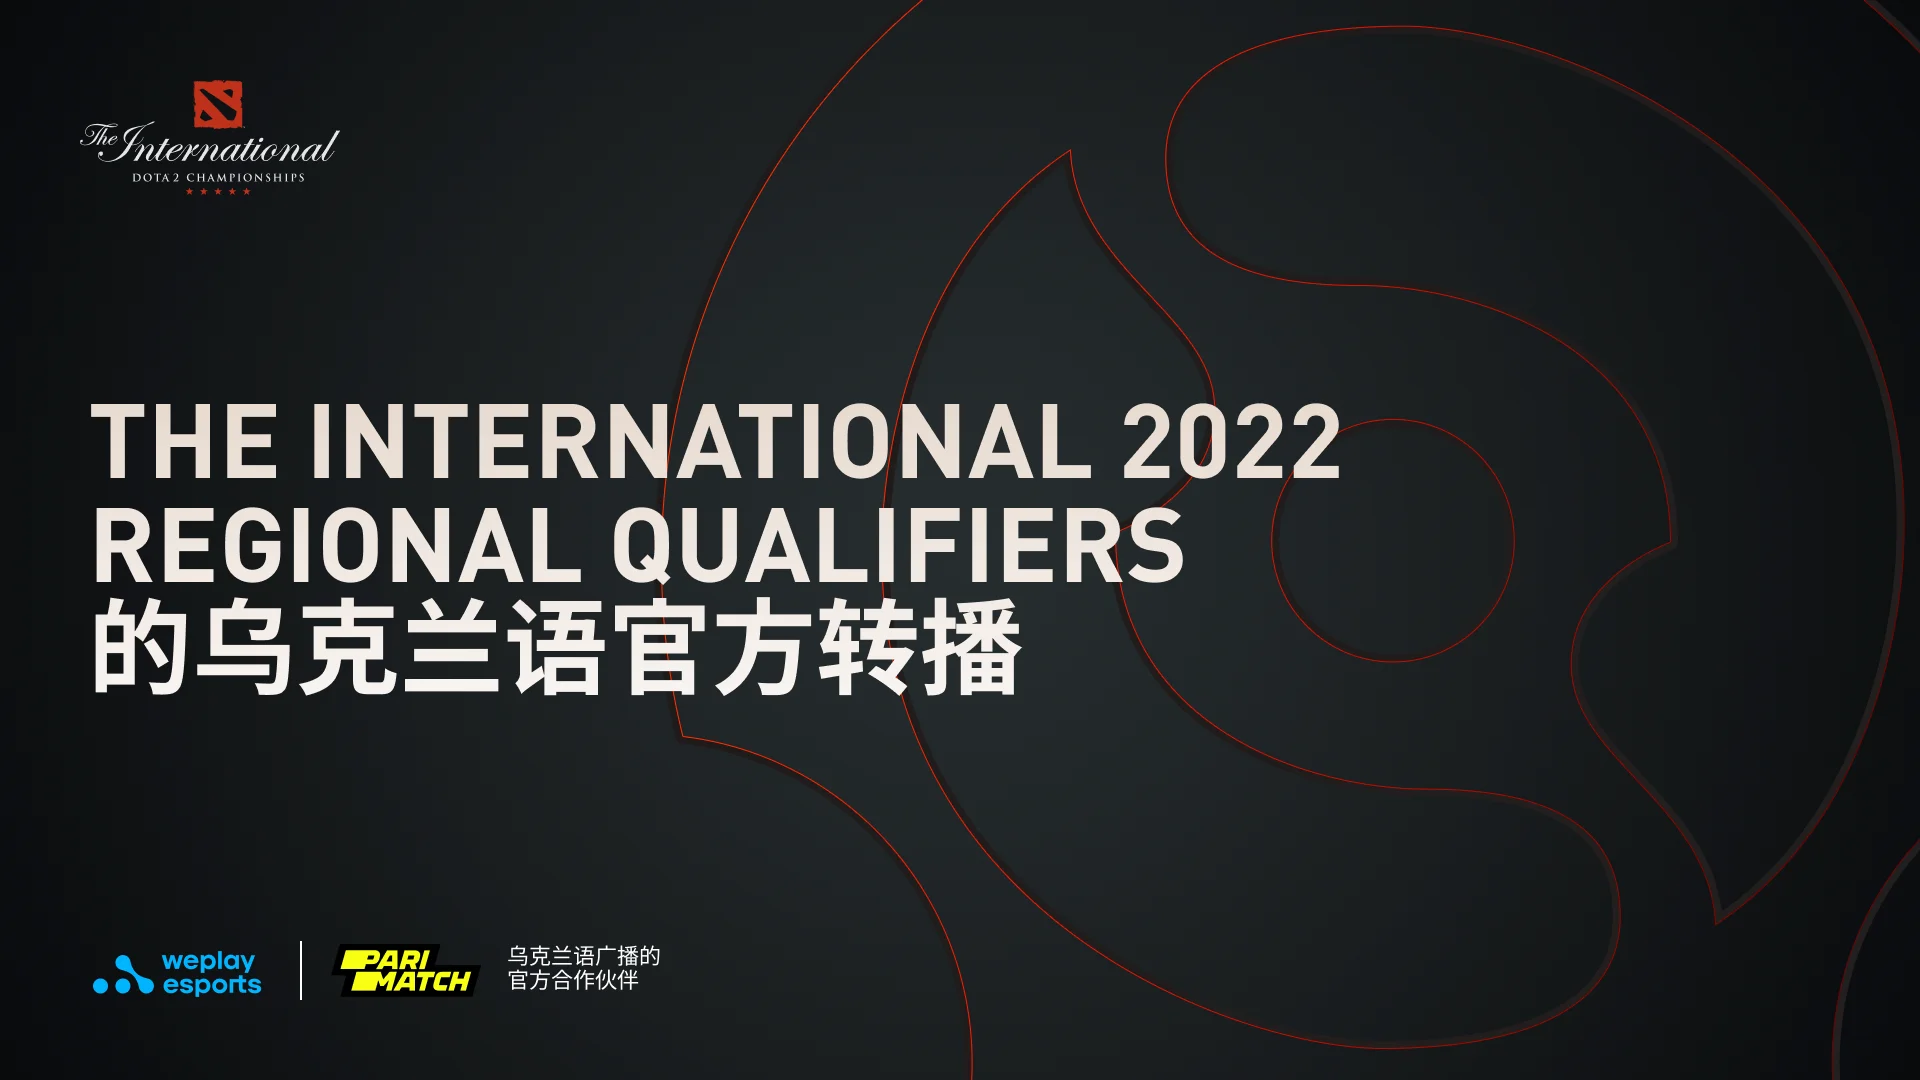 WePlay Esports 将主持 The International 2022 Regional Qualifiers 的乌克兰语官方转播。图像：WePlay Holding